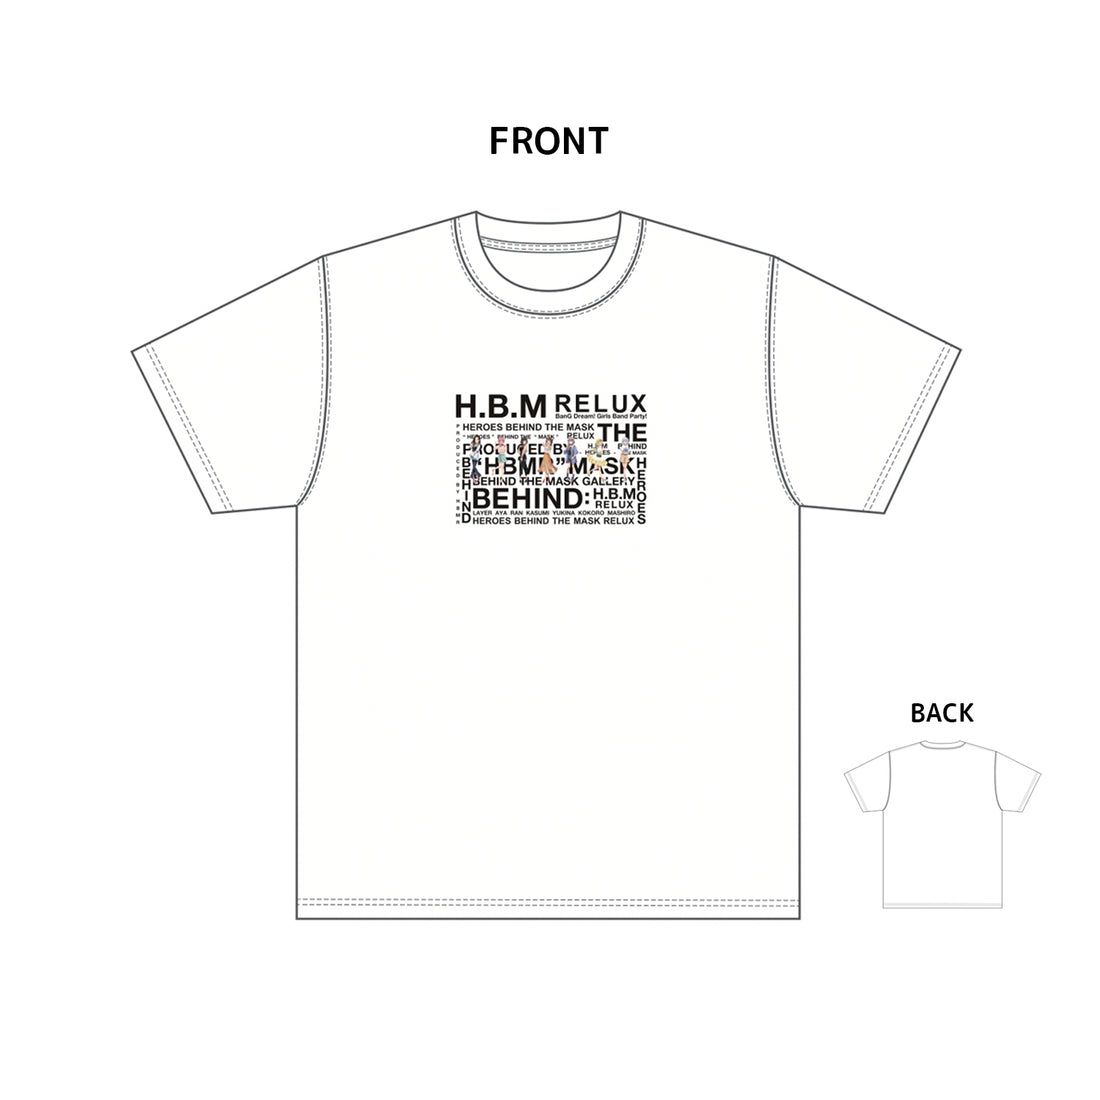 Garupa HBMR Illustration collaboration T-shirt A